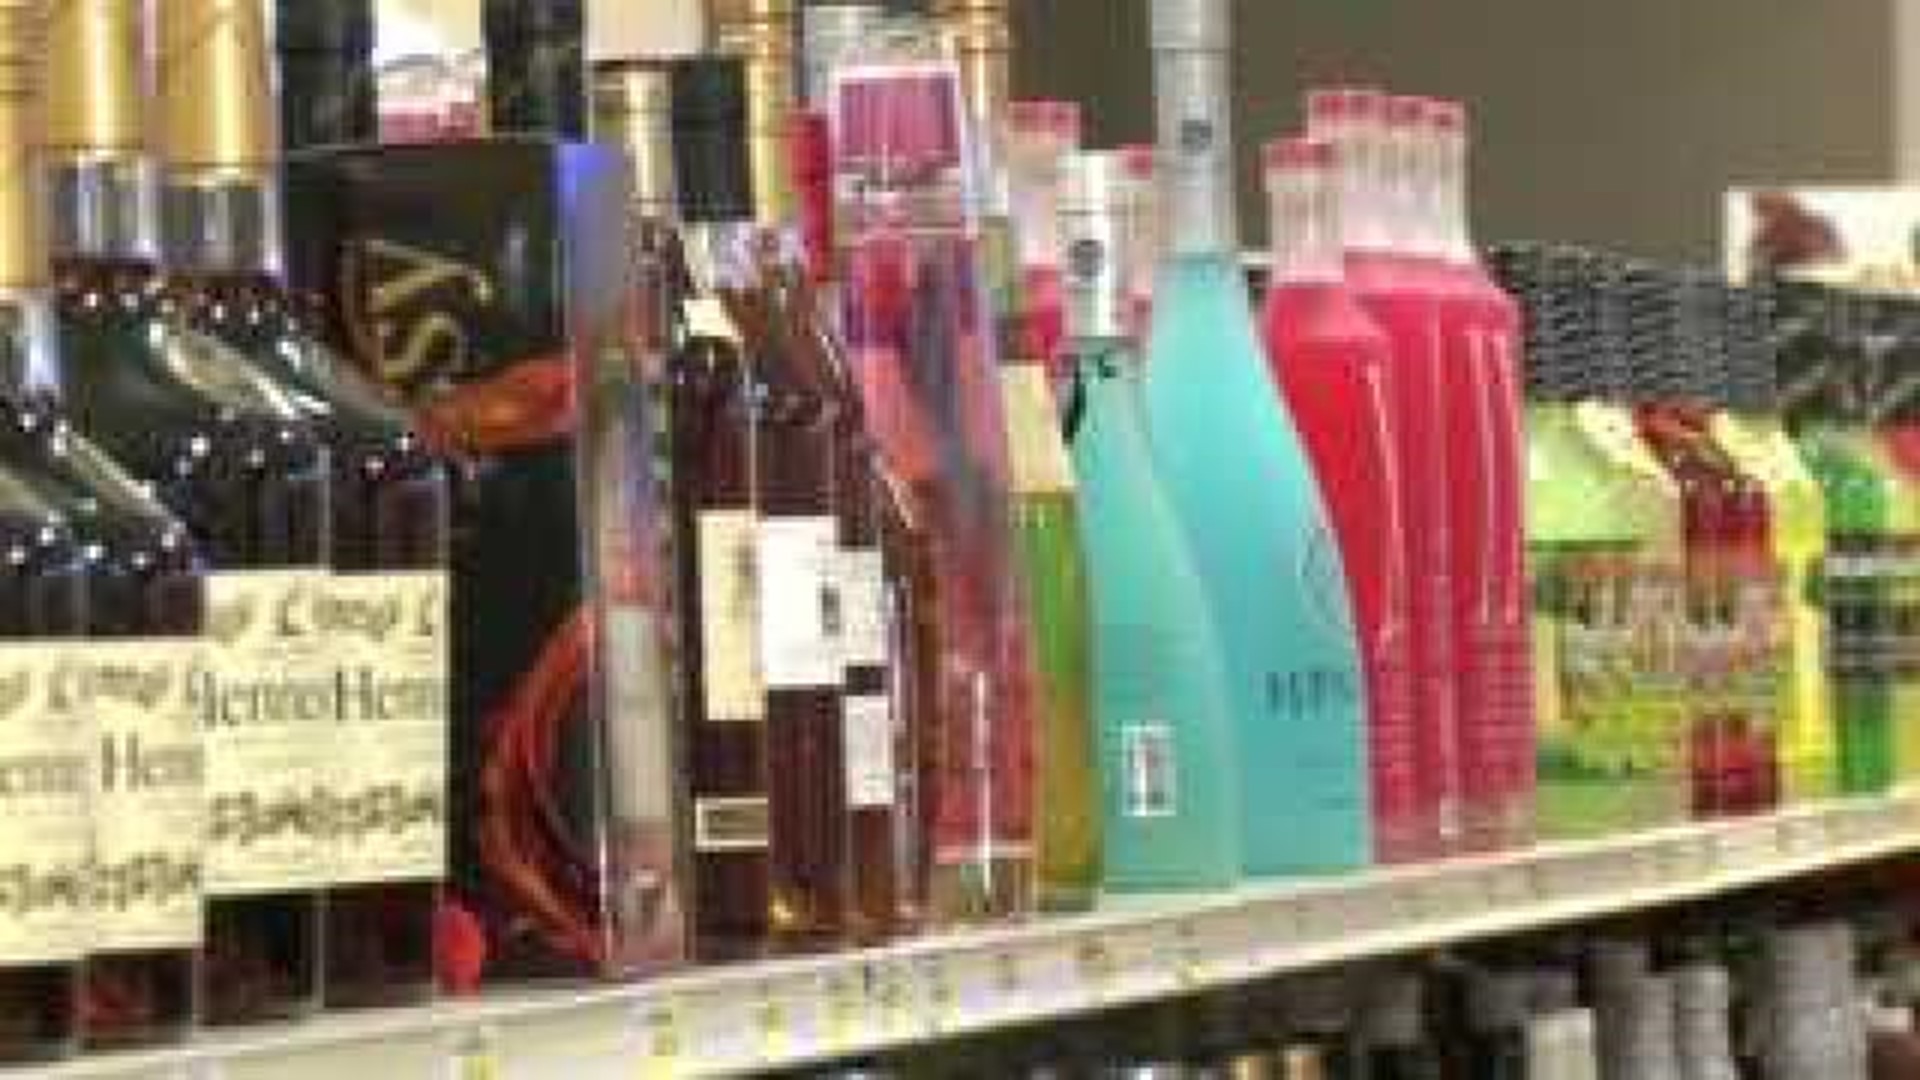 Retail Alcohol Sales in Benton County